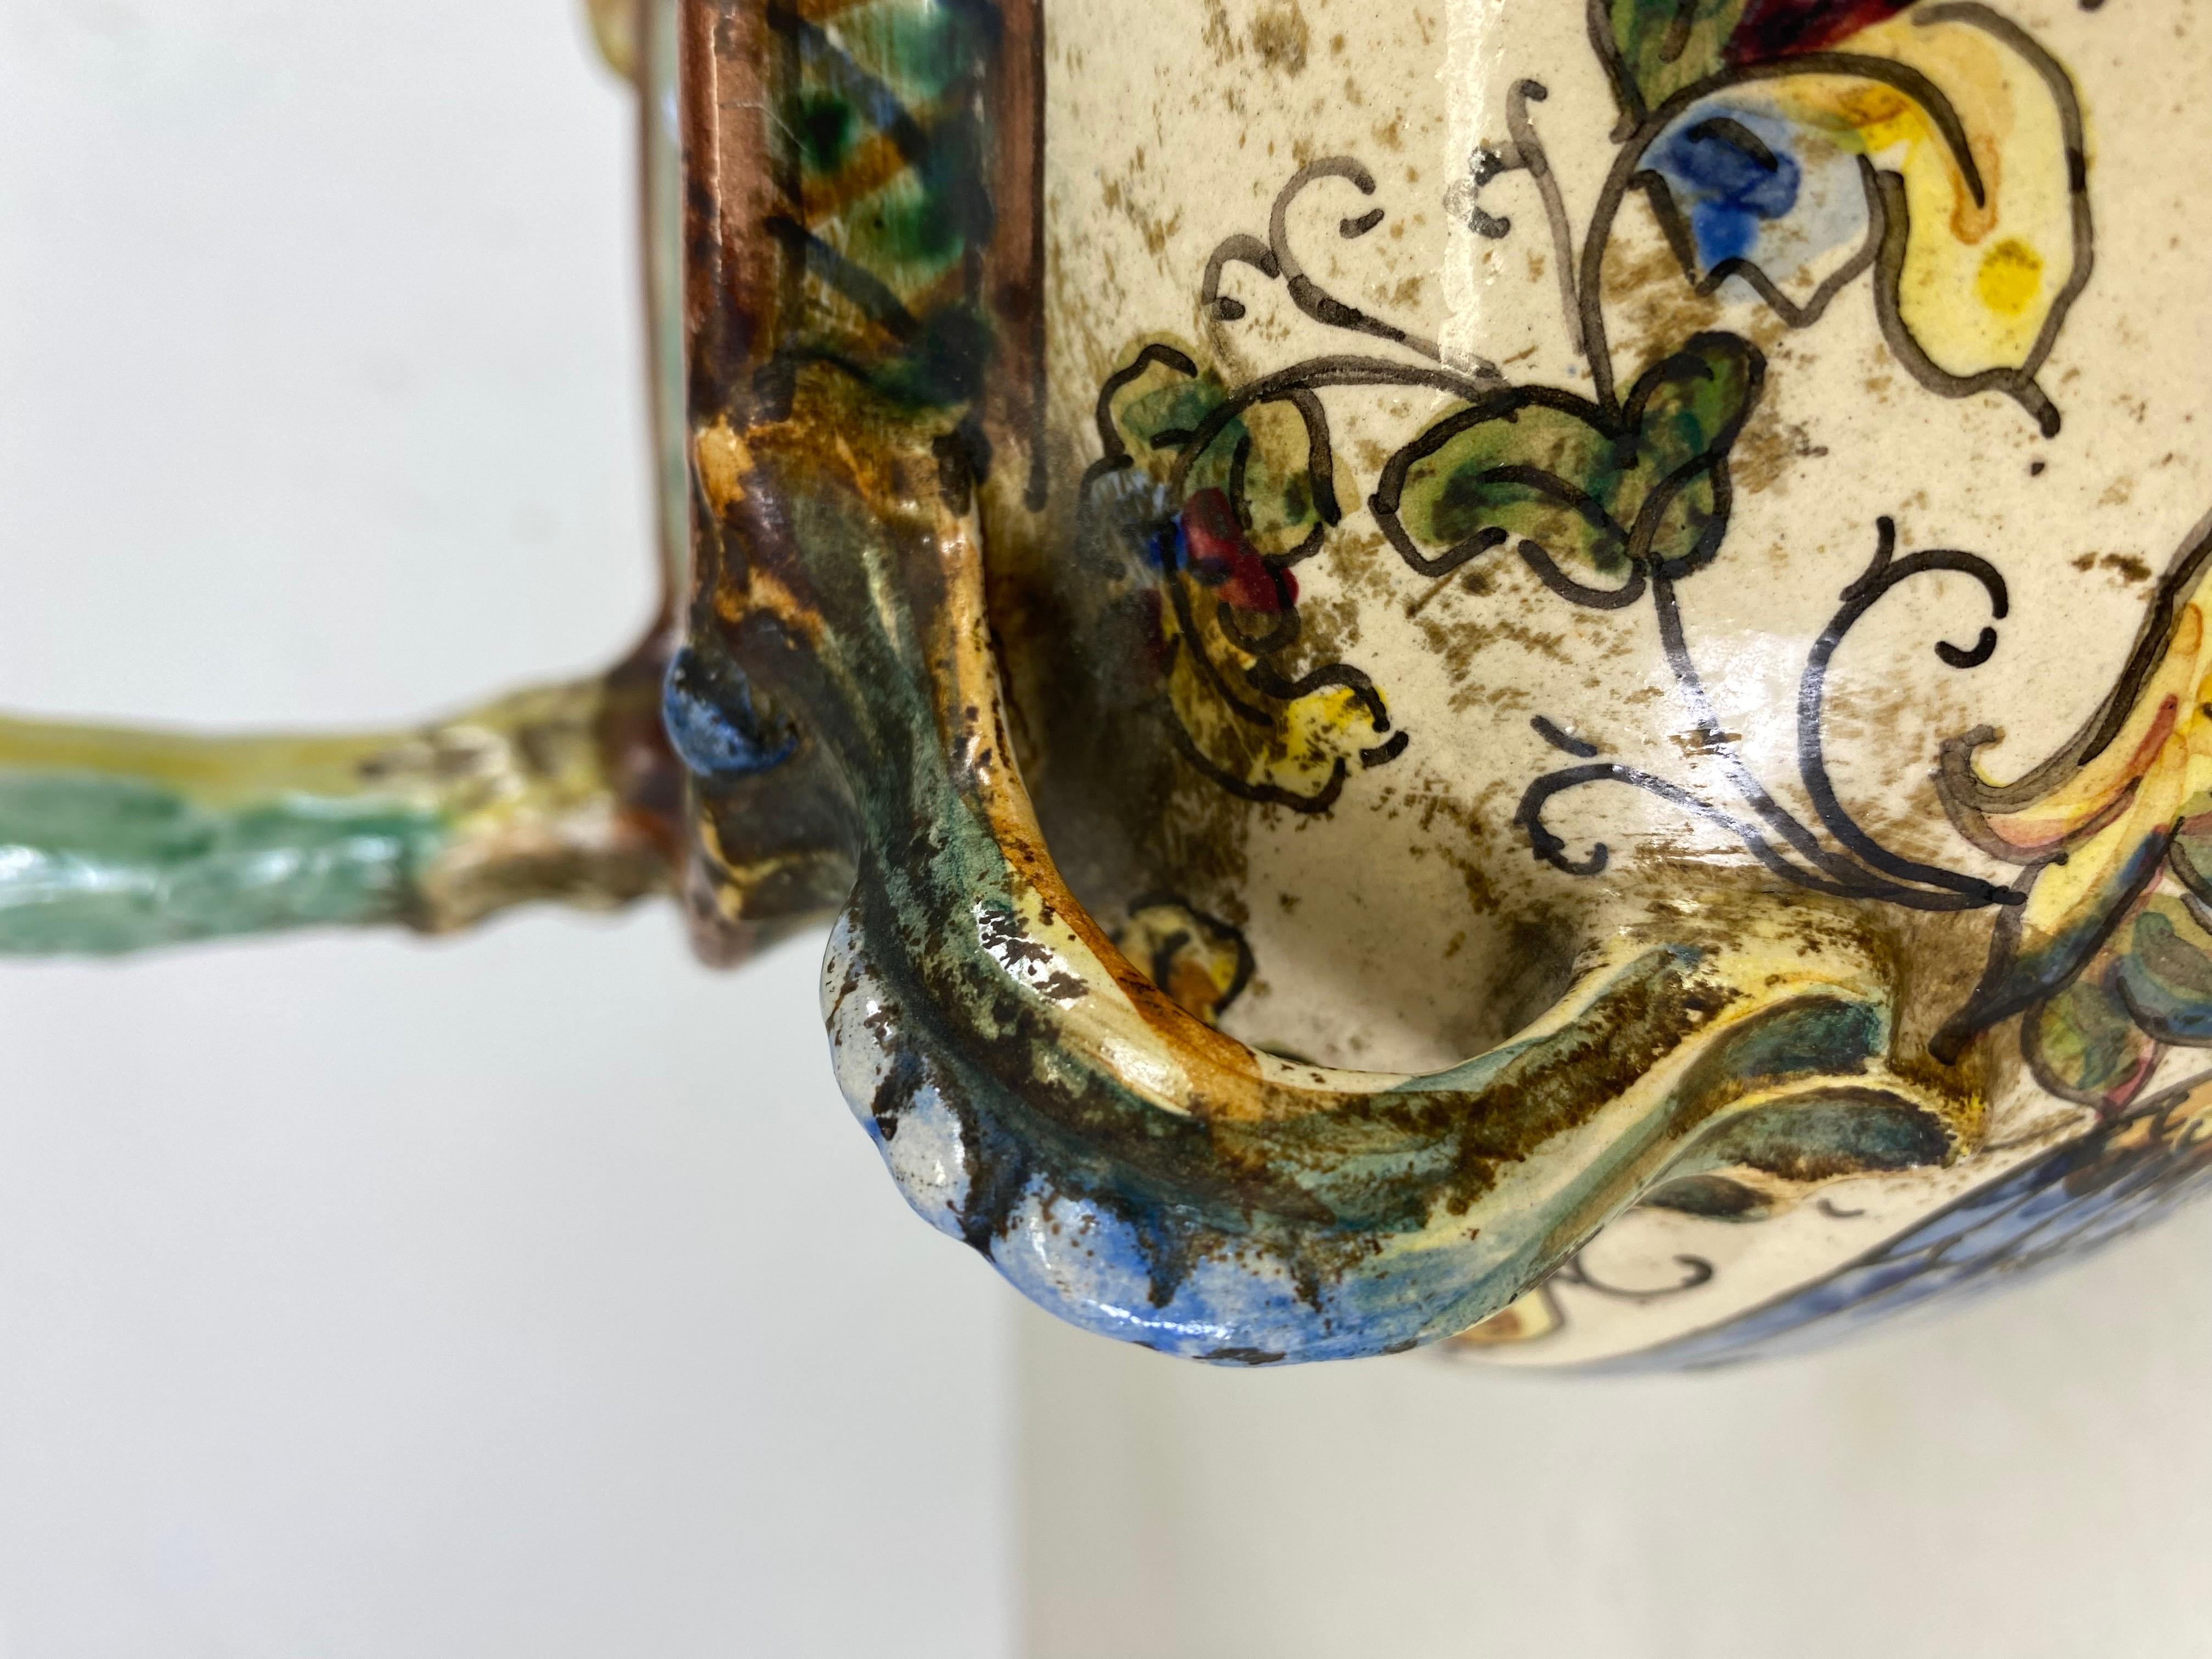 Glazed Antique Italian Renaissance Revival Elaborately Decorated Terracotta Pitcher For Sale